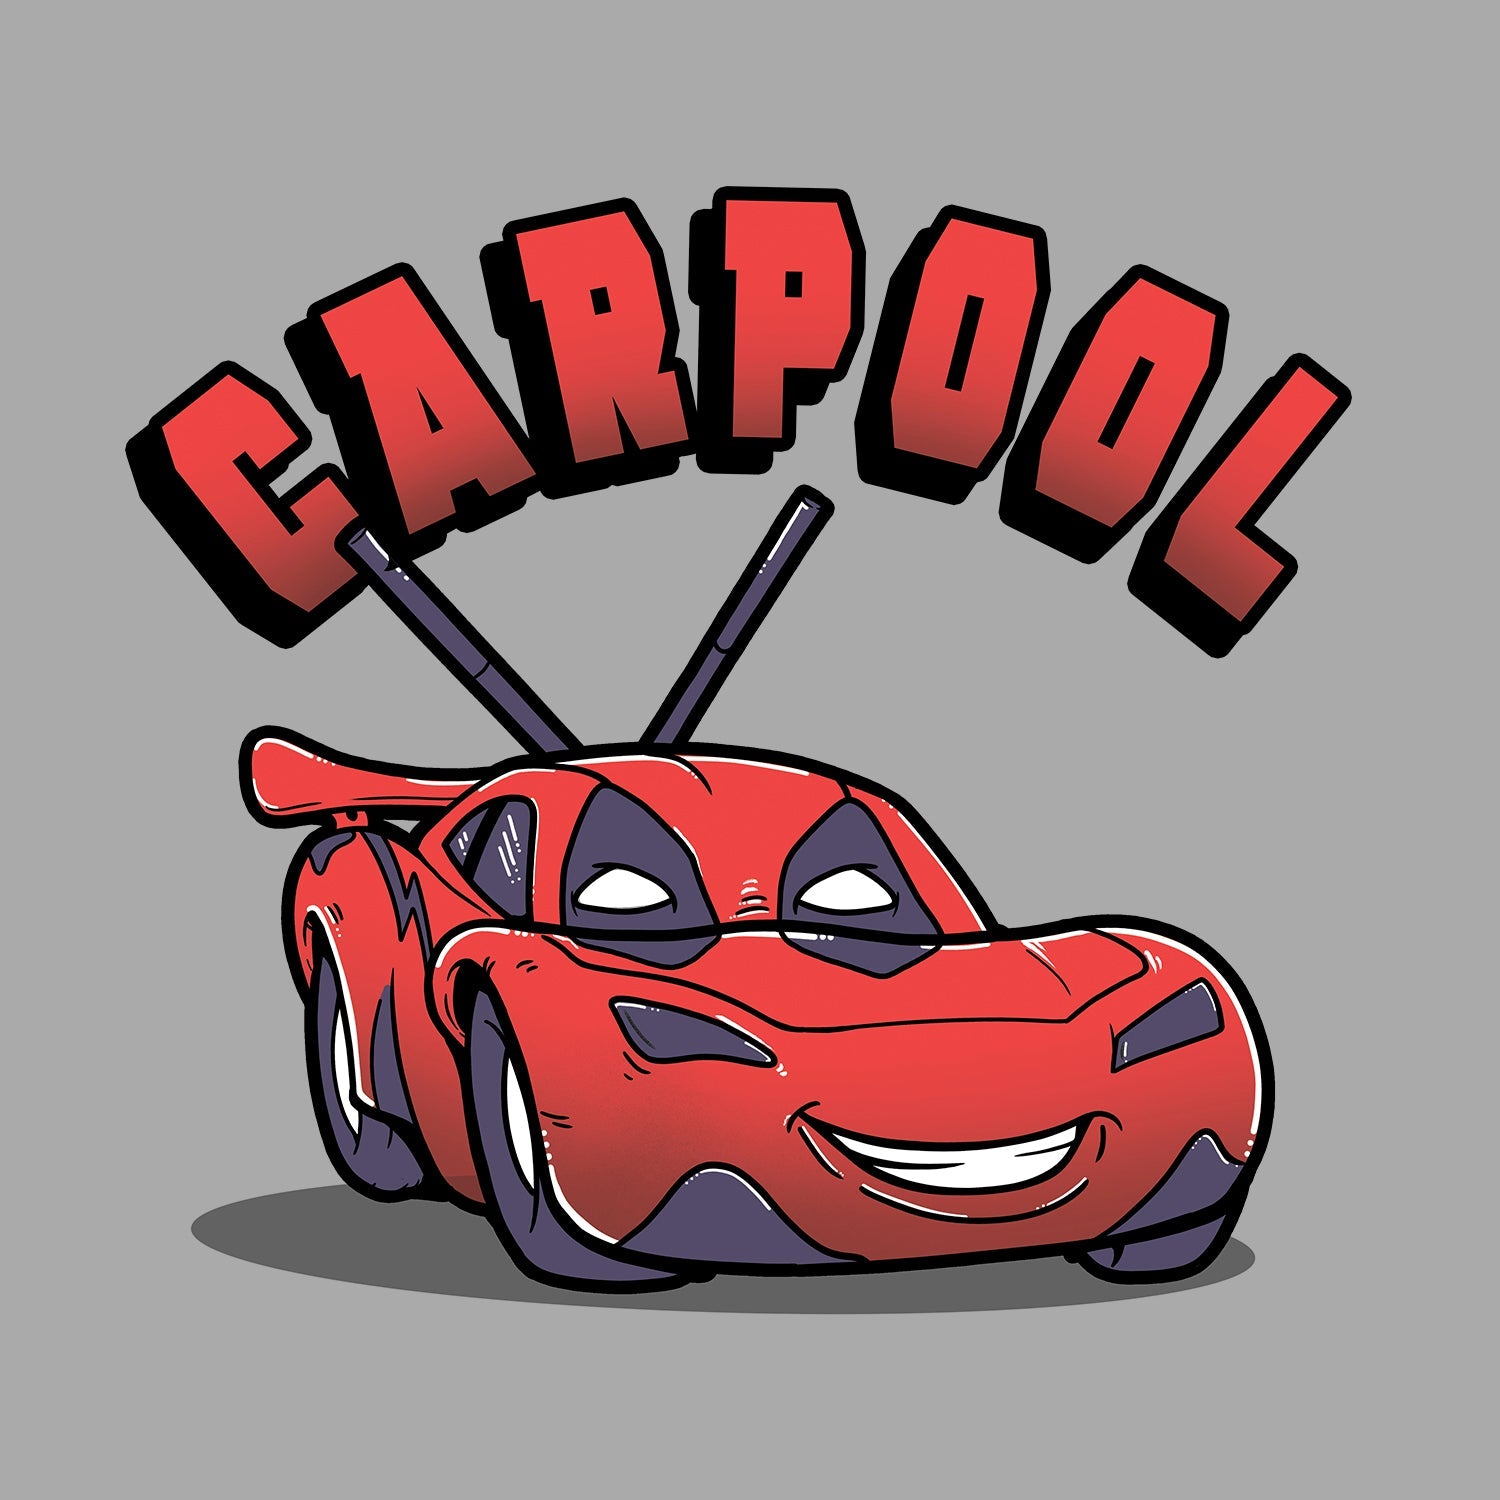 Carpool T Shirt